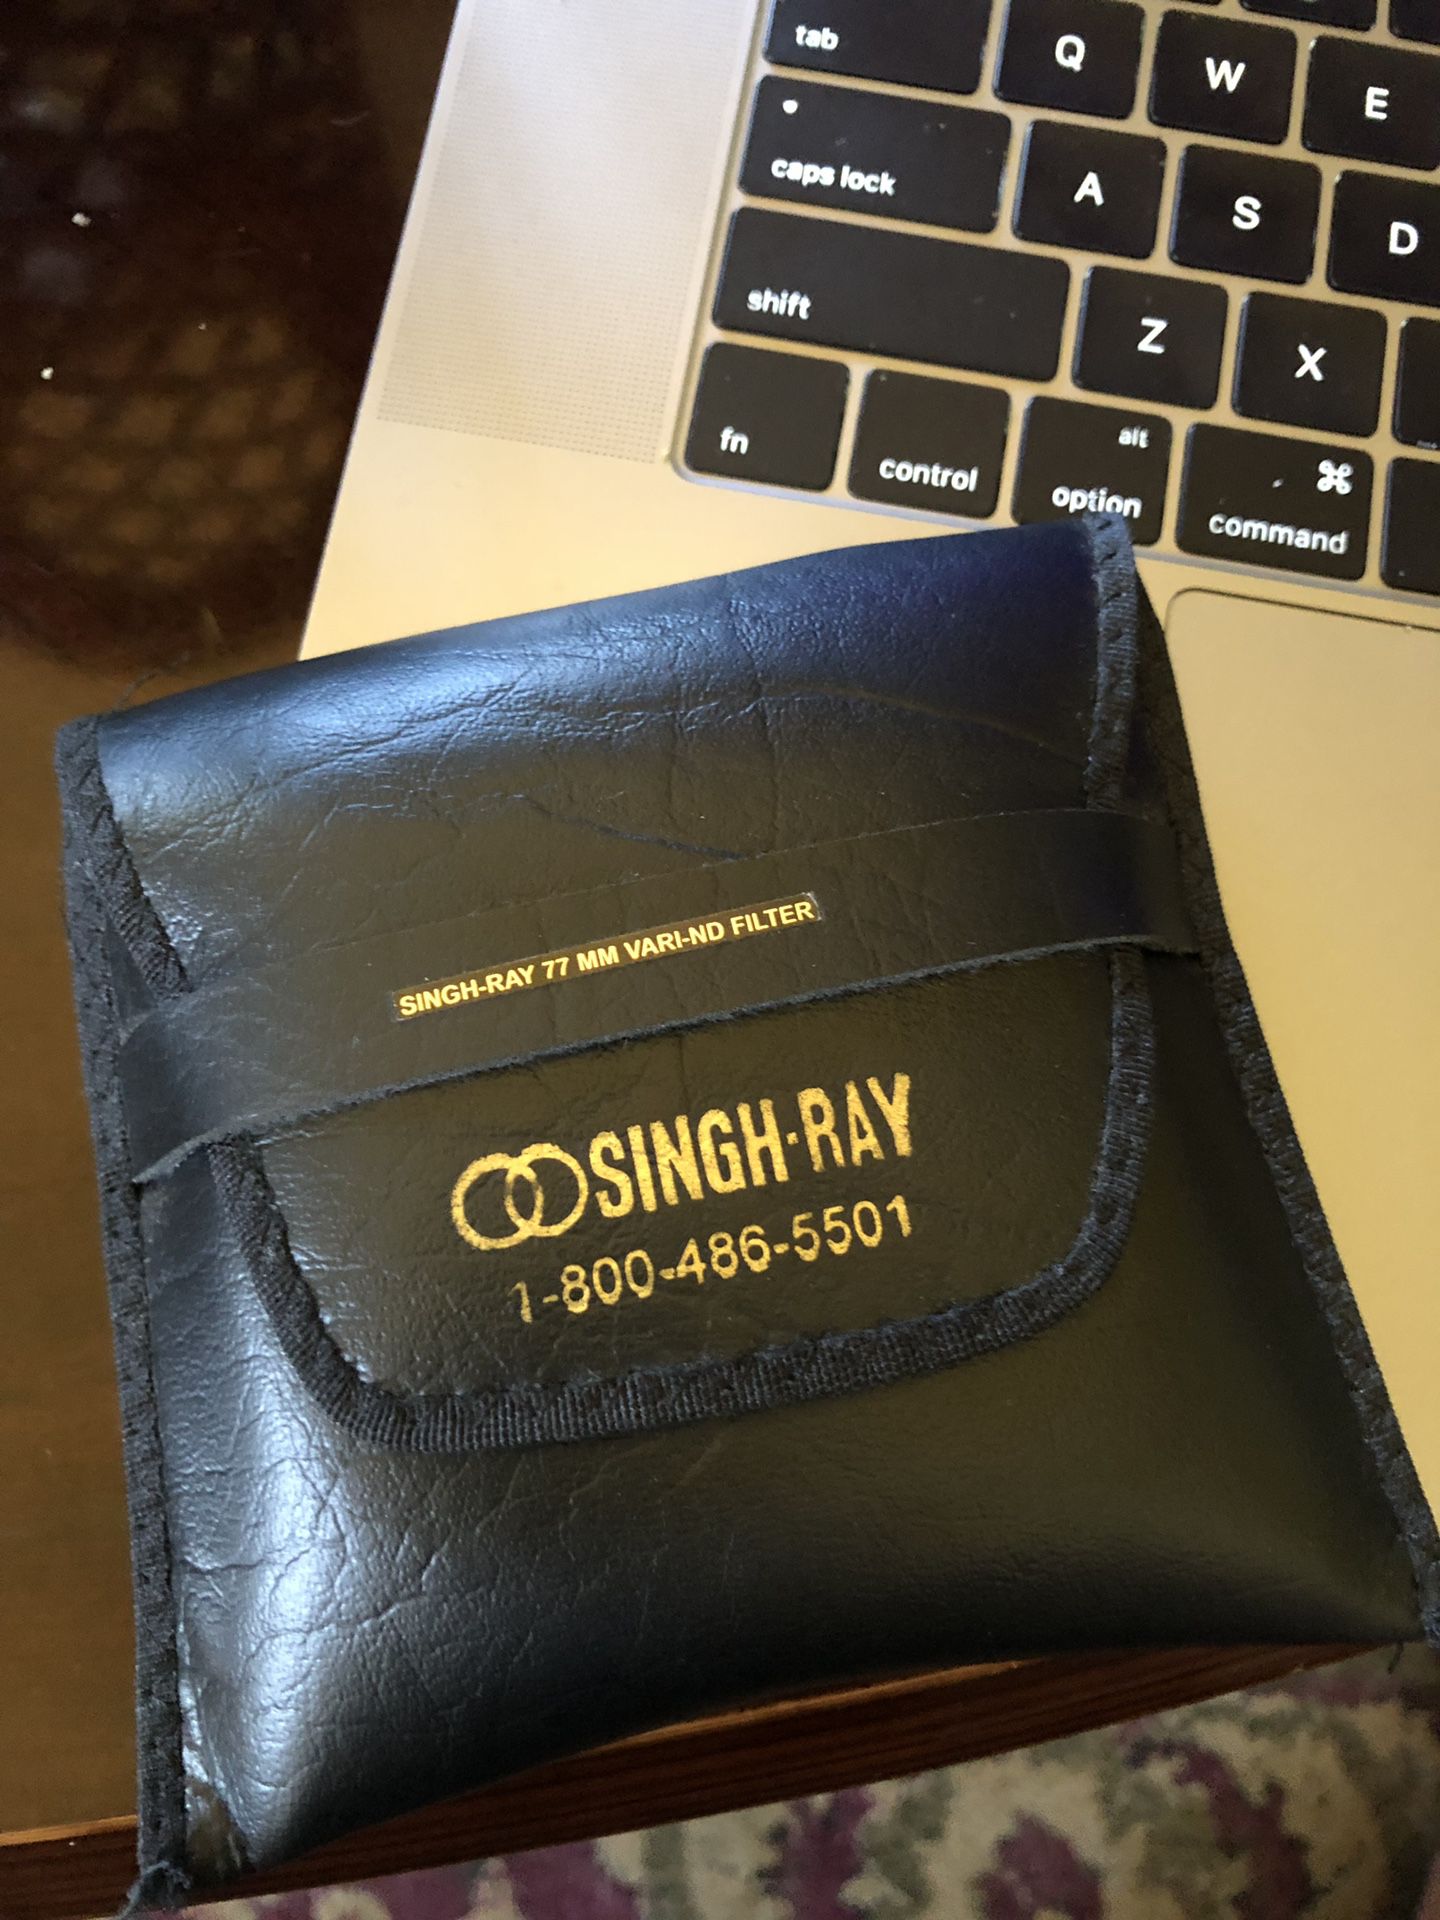 Singh-Ray 77mm VARI-ND Filter